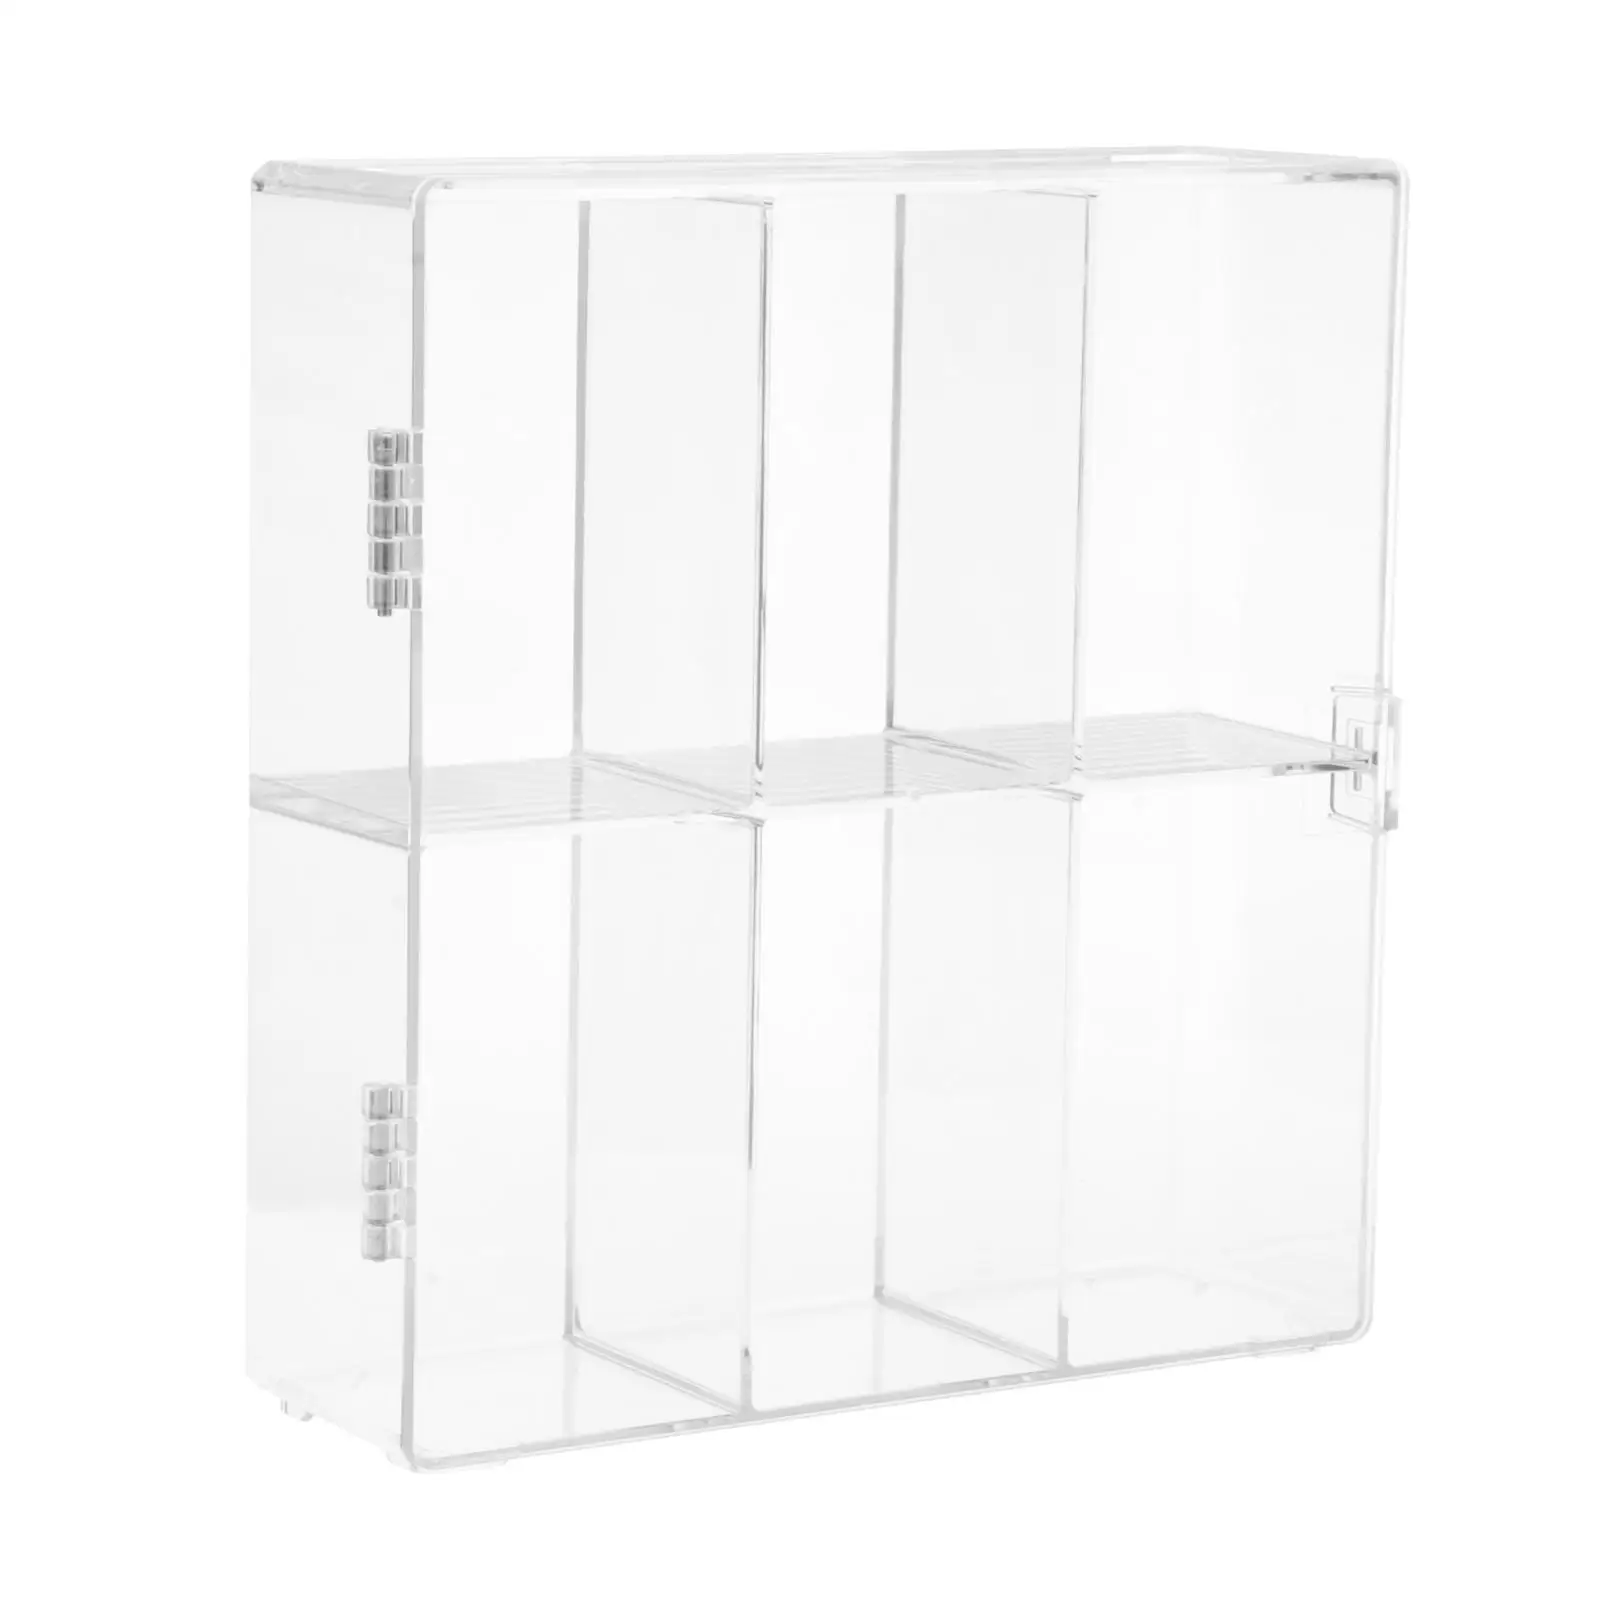 Acrylic Display Rack Stackable 6 Shelves Protection Shelves Storage Box for